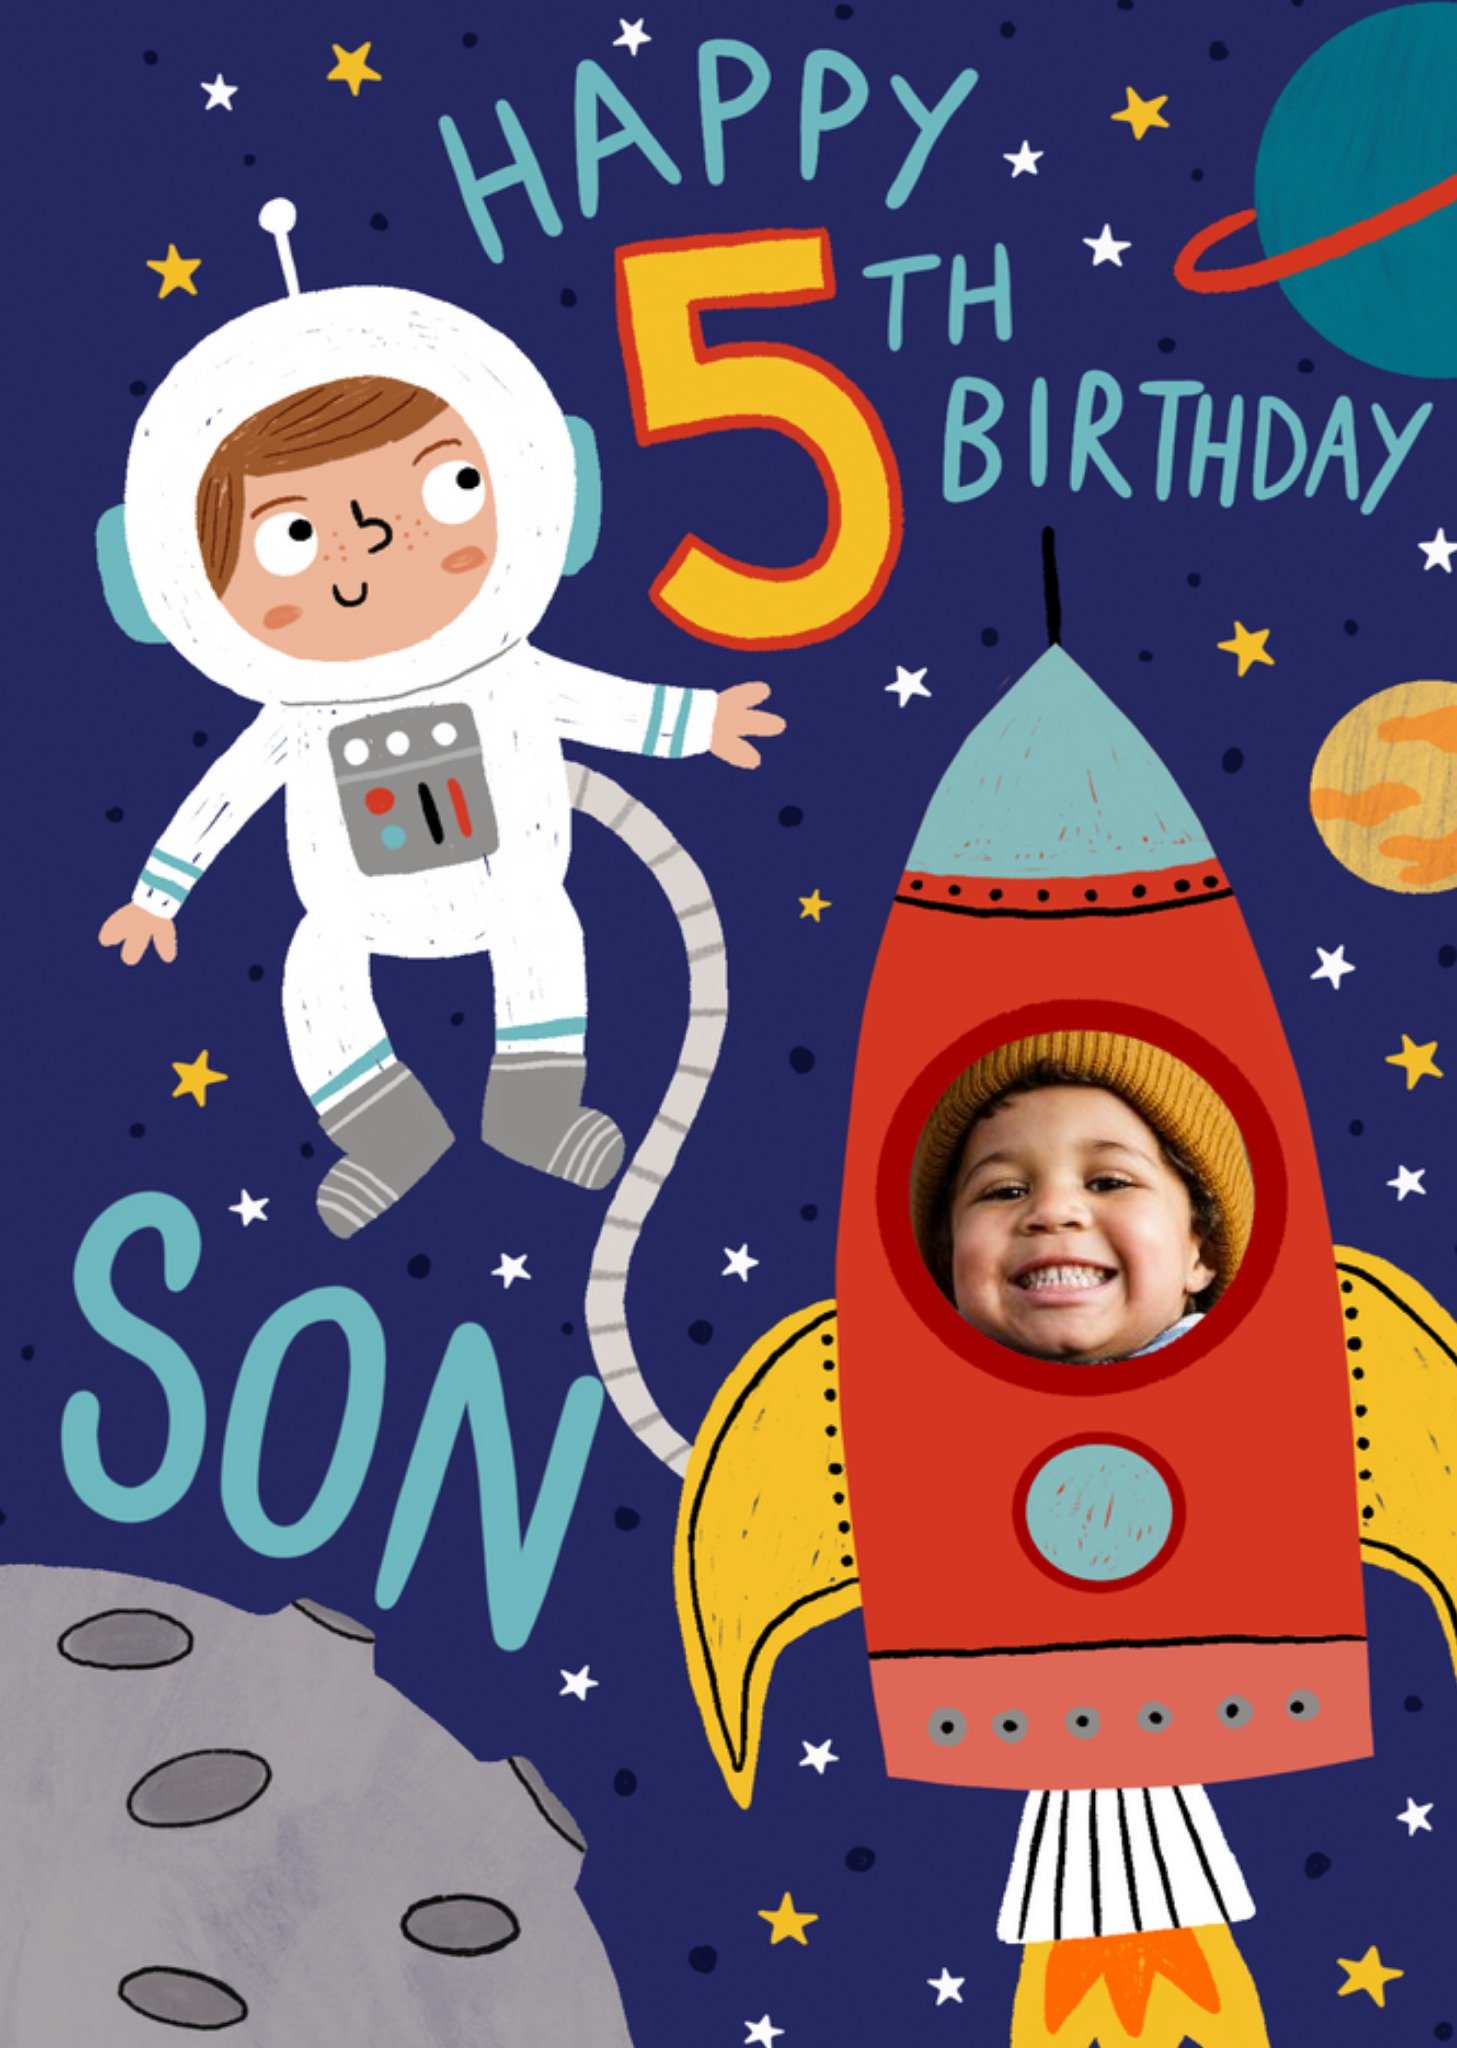 Moonpig Happy 5th Birthday Son Space Rocket Astronaut Birthday Card Ecard